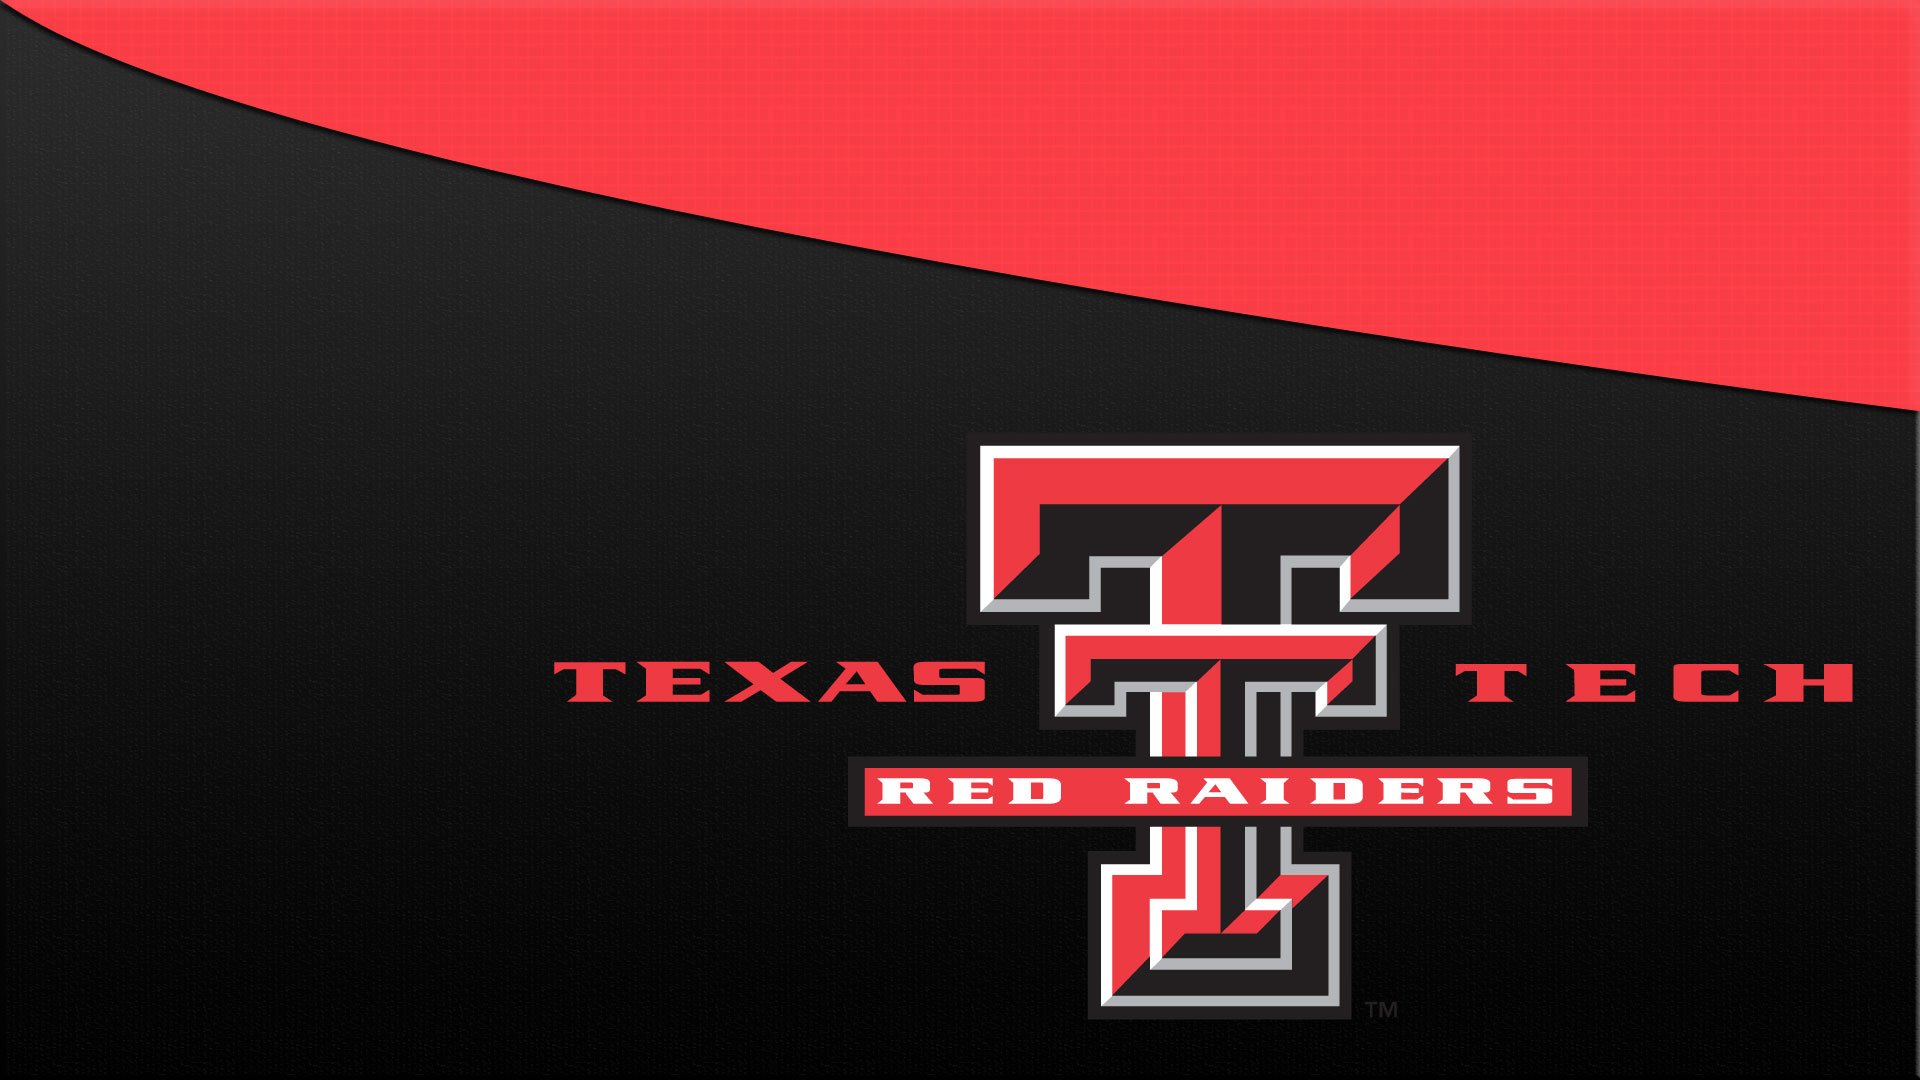 TEXAS TECH RED RAIDERS college football texastech wallpaper ...